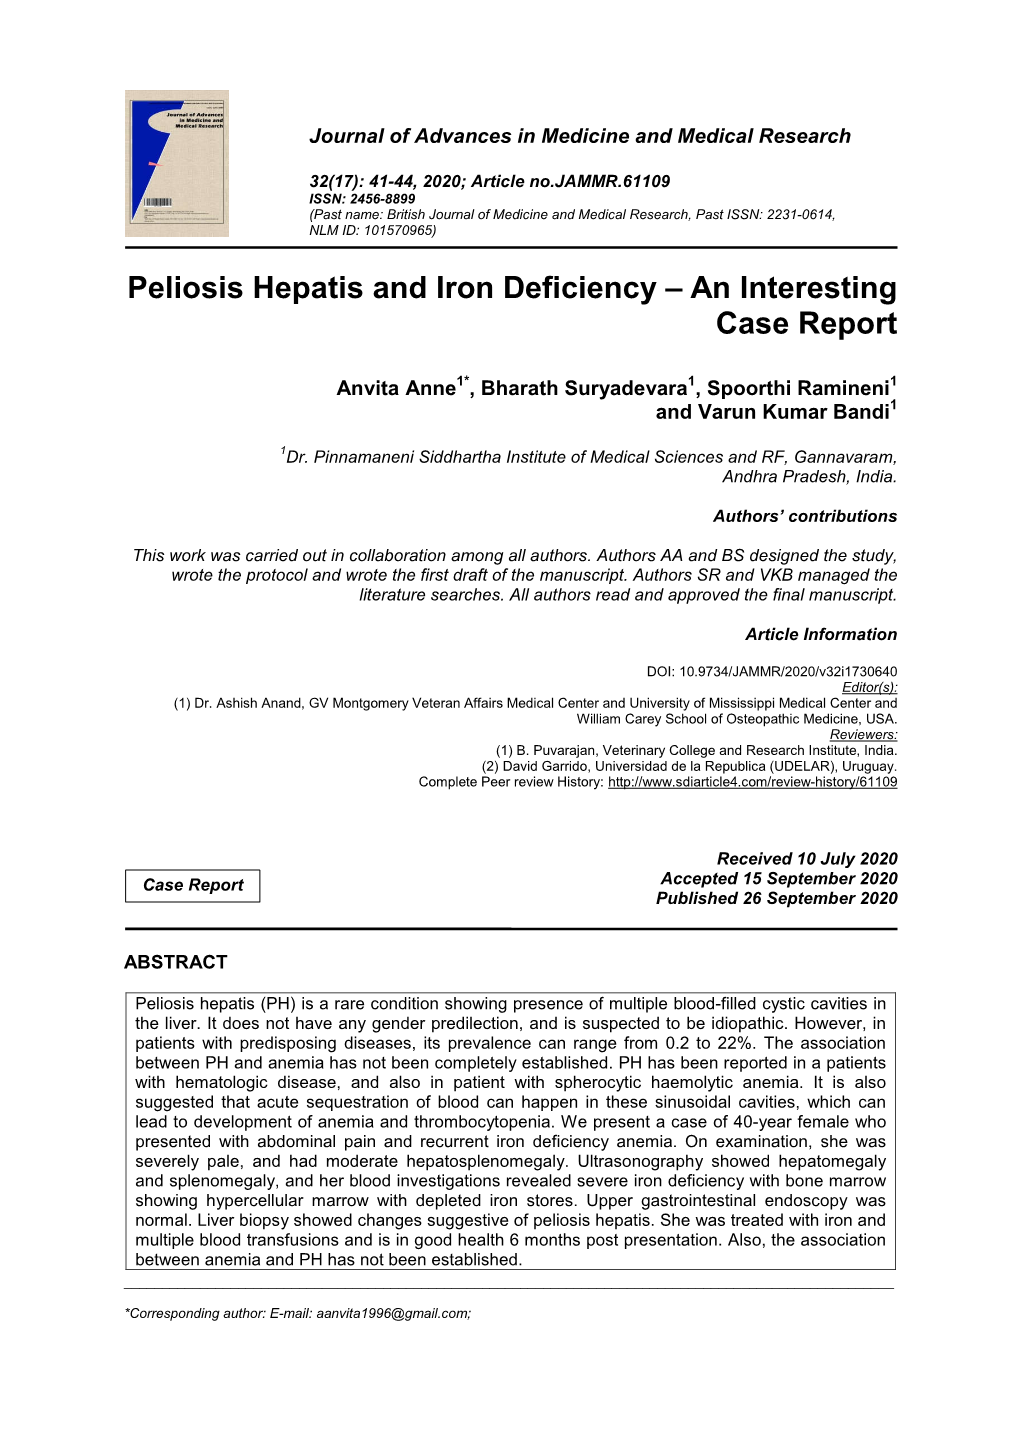 Peliosis Hepatis and Iron Deficiency – an Interesting Case Report